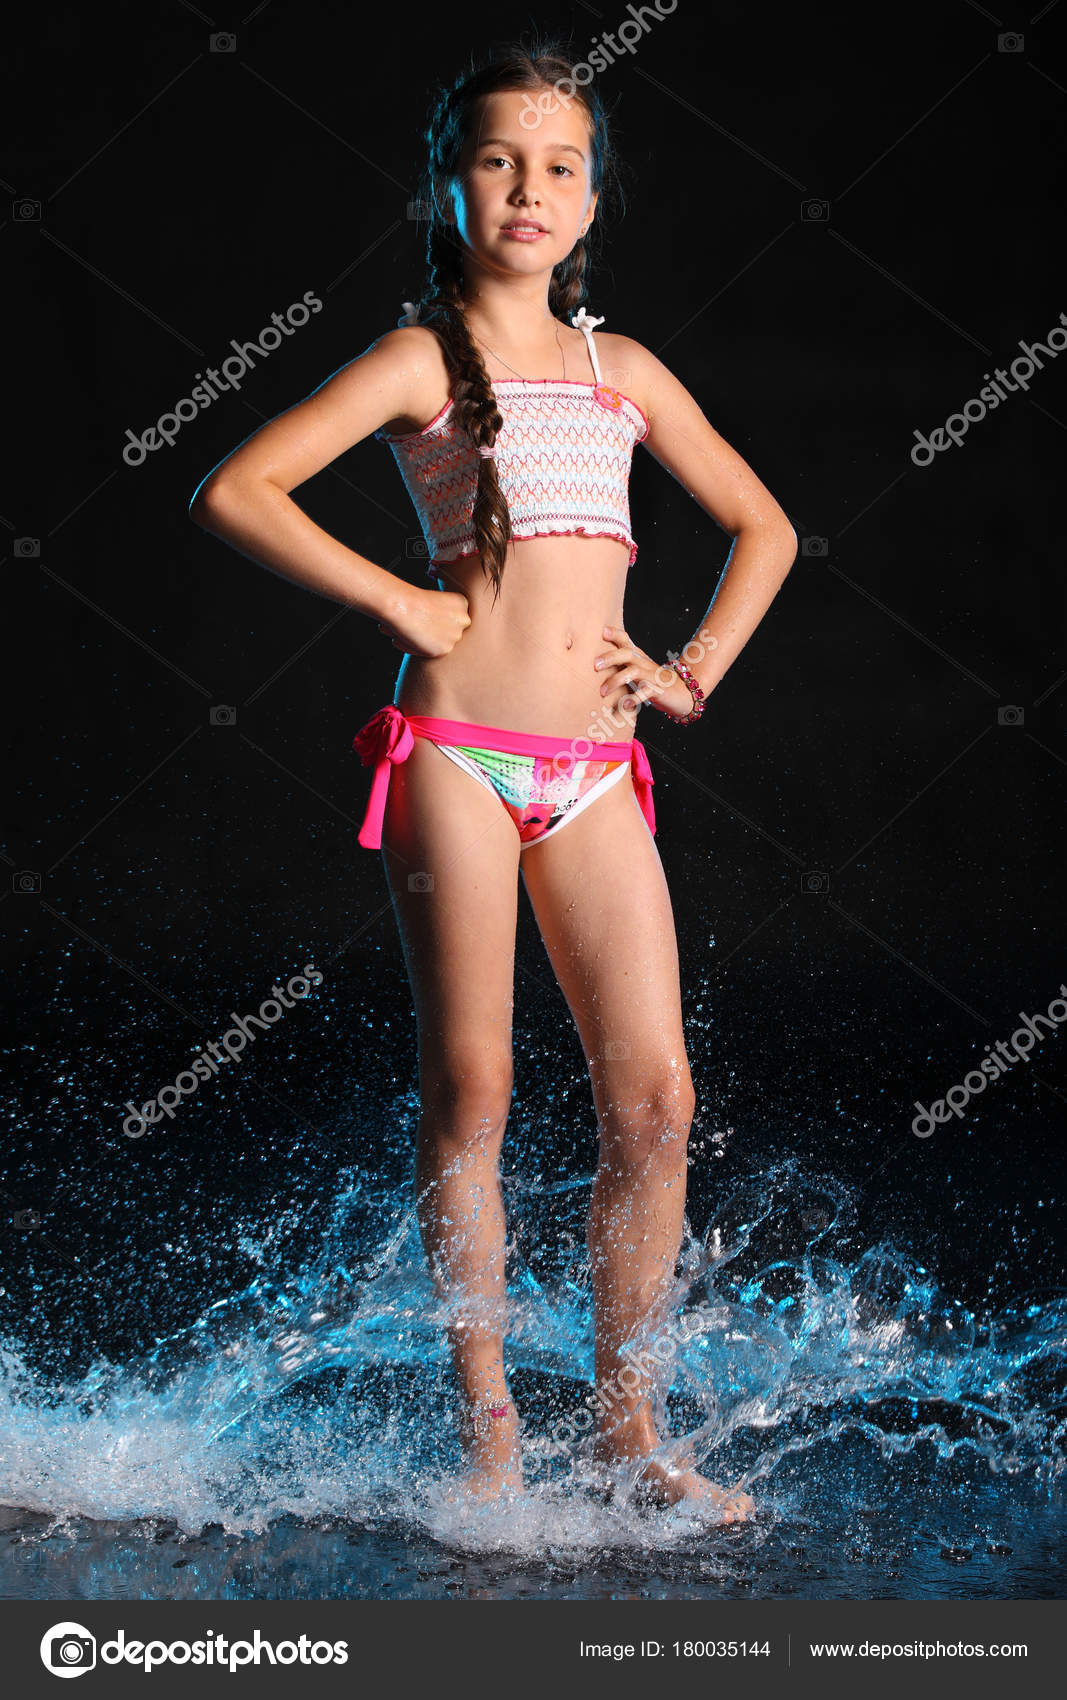 Adorable Young Teenage Girl Swimsuit Stands Barefoot Splashing